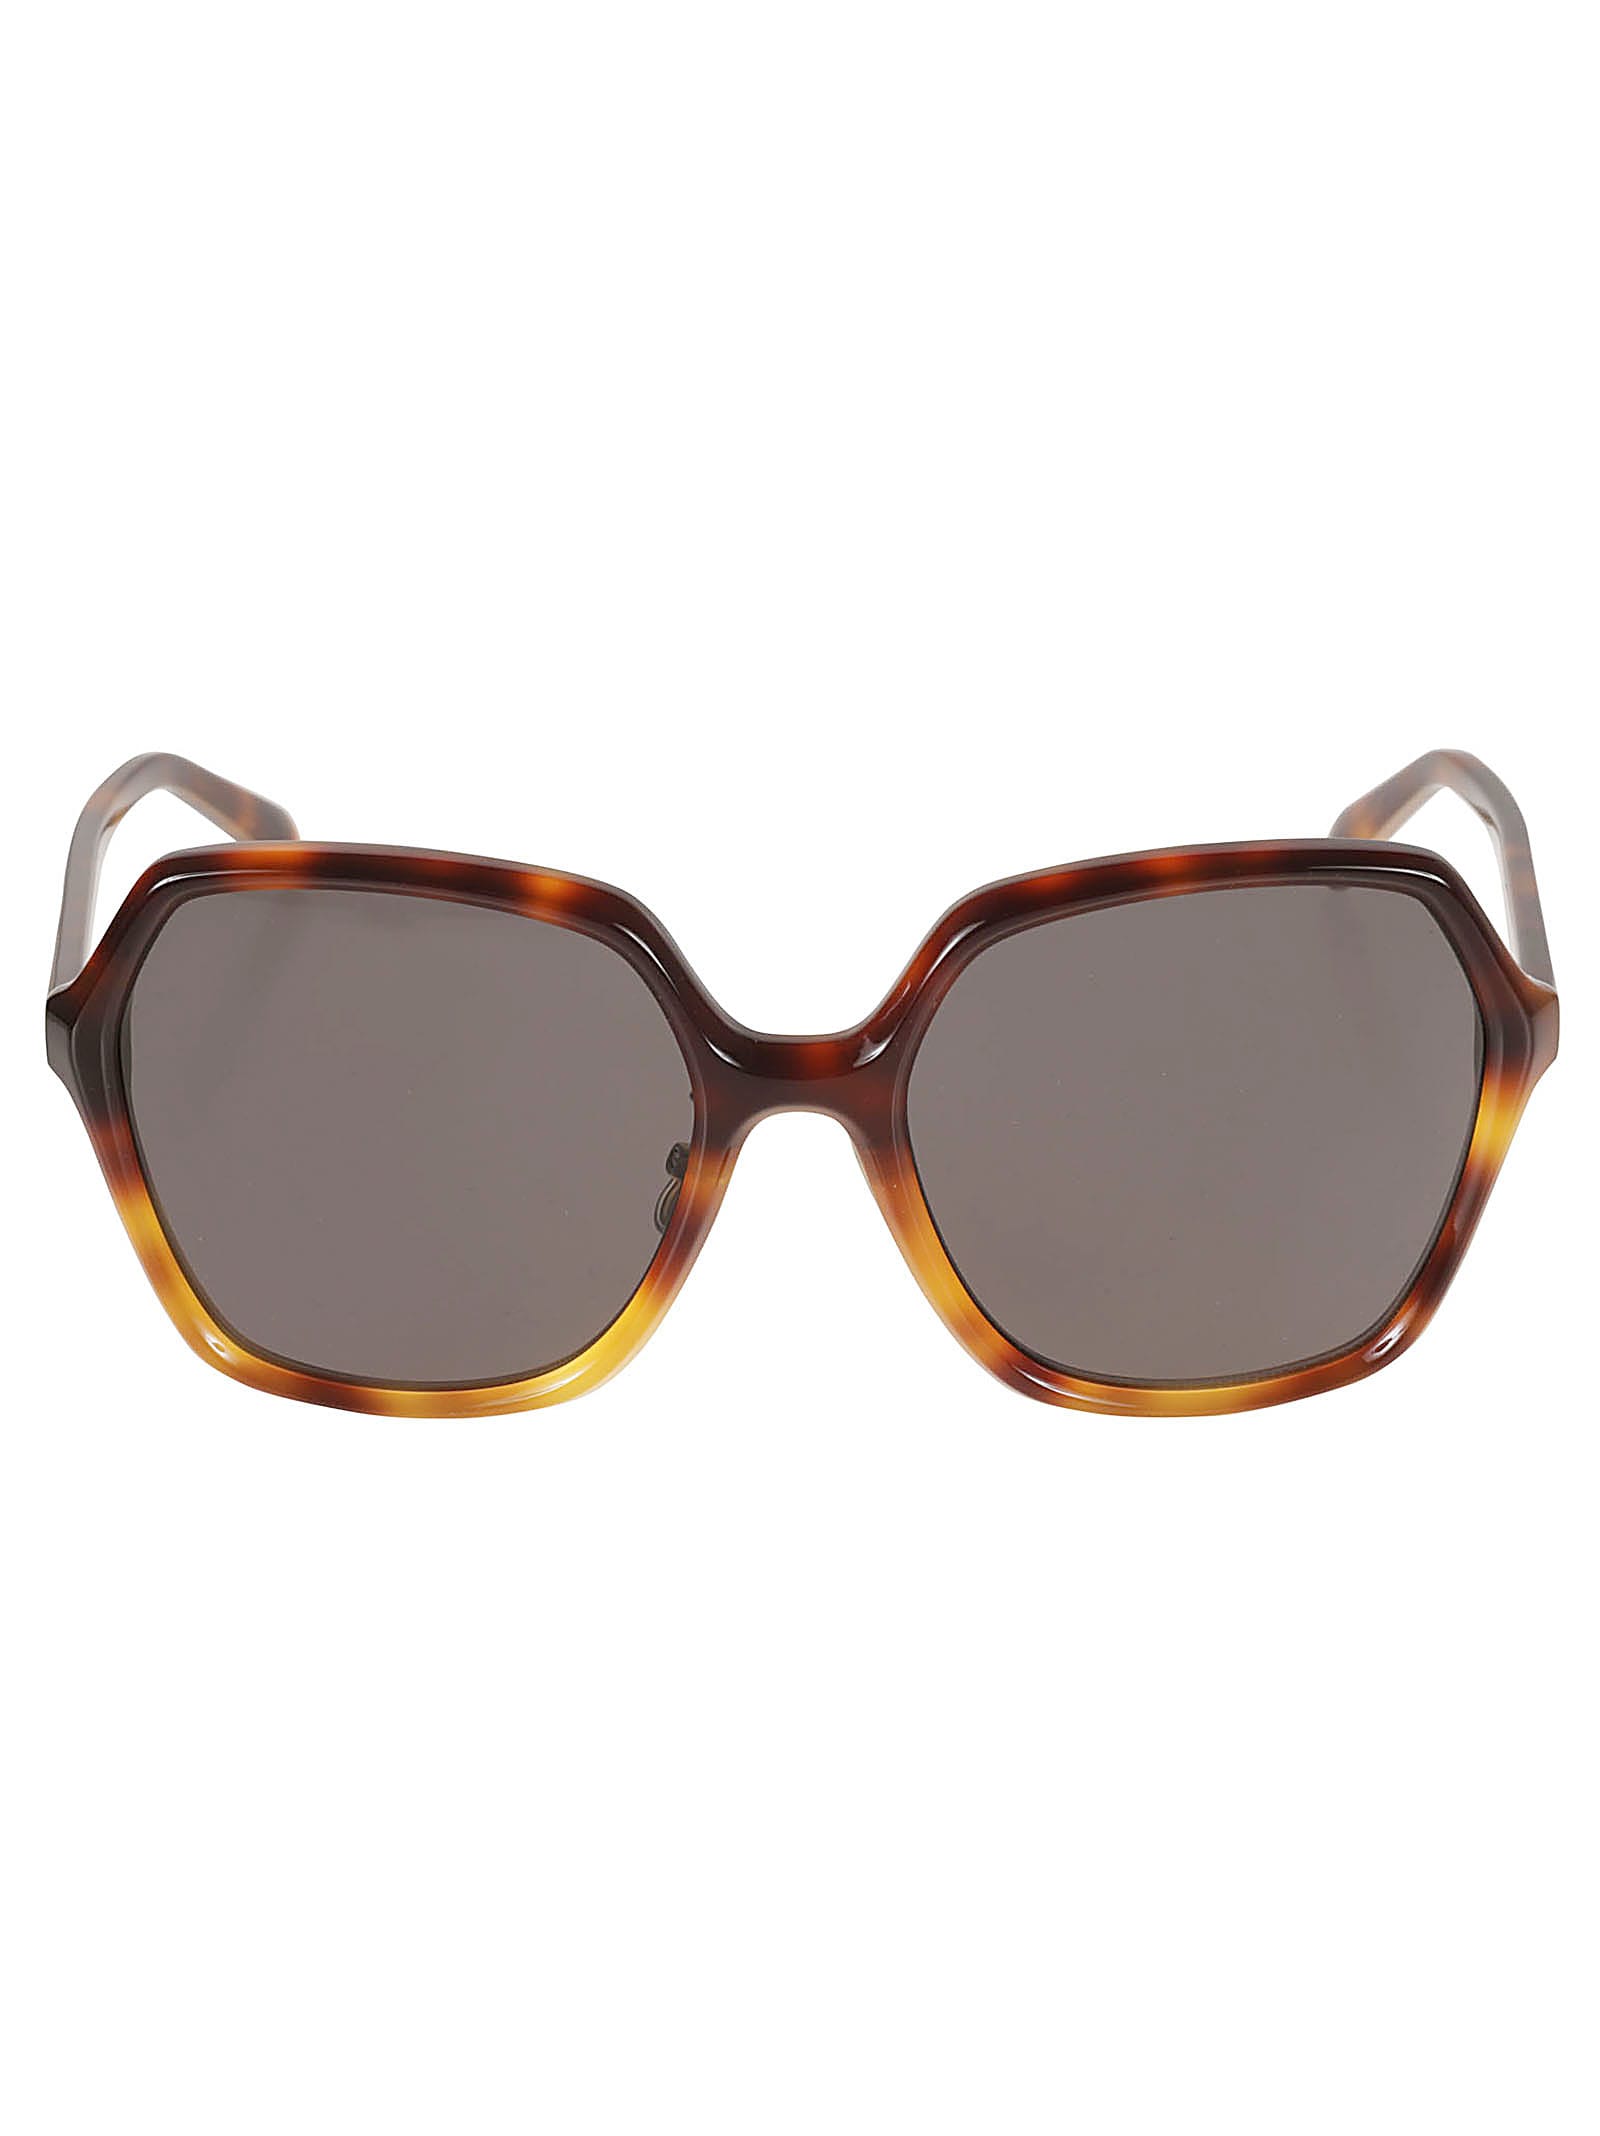 Celine Butterfly Classic Sunglasses